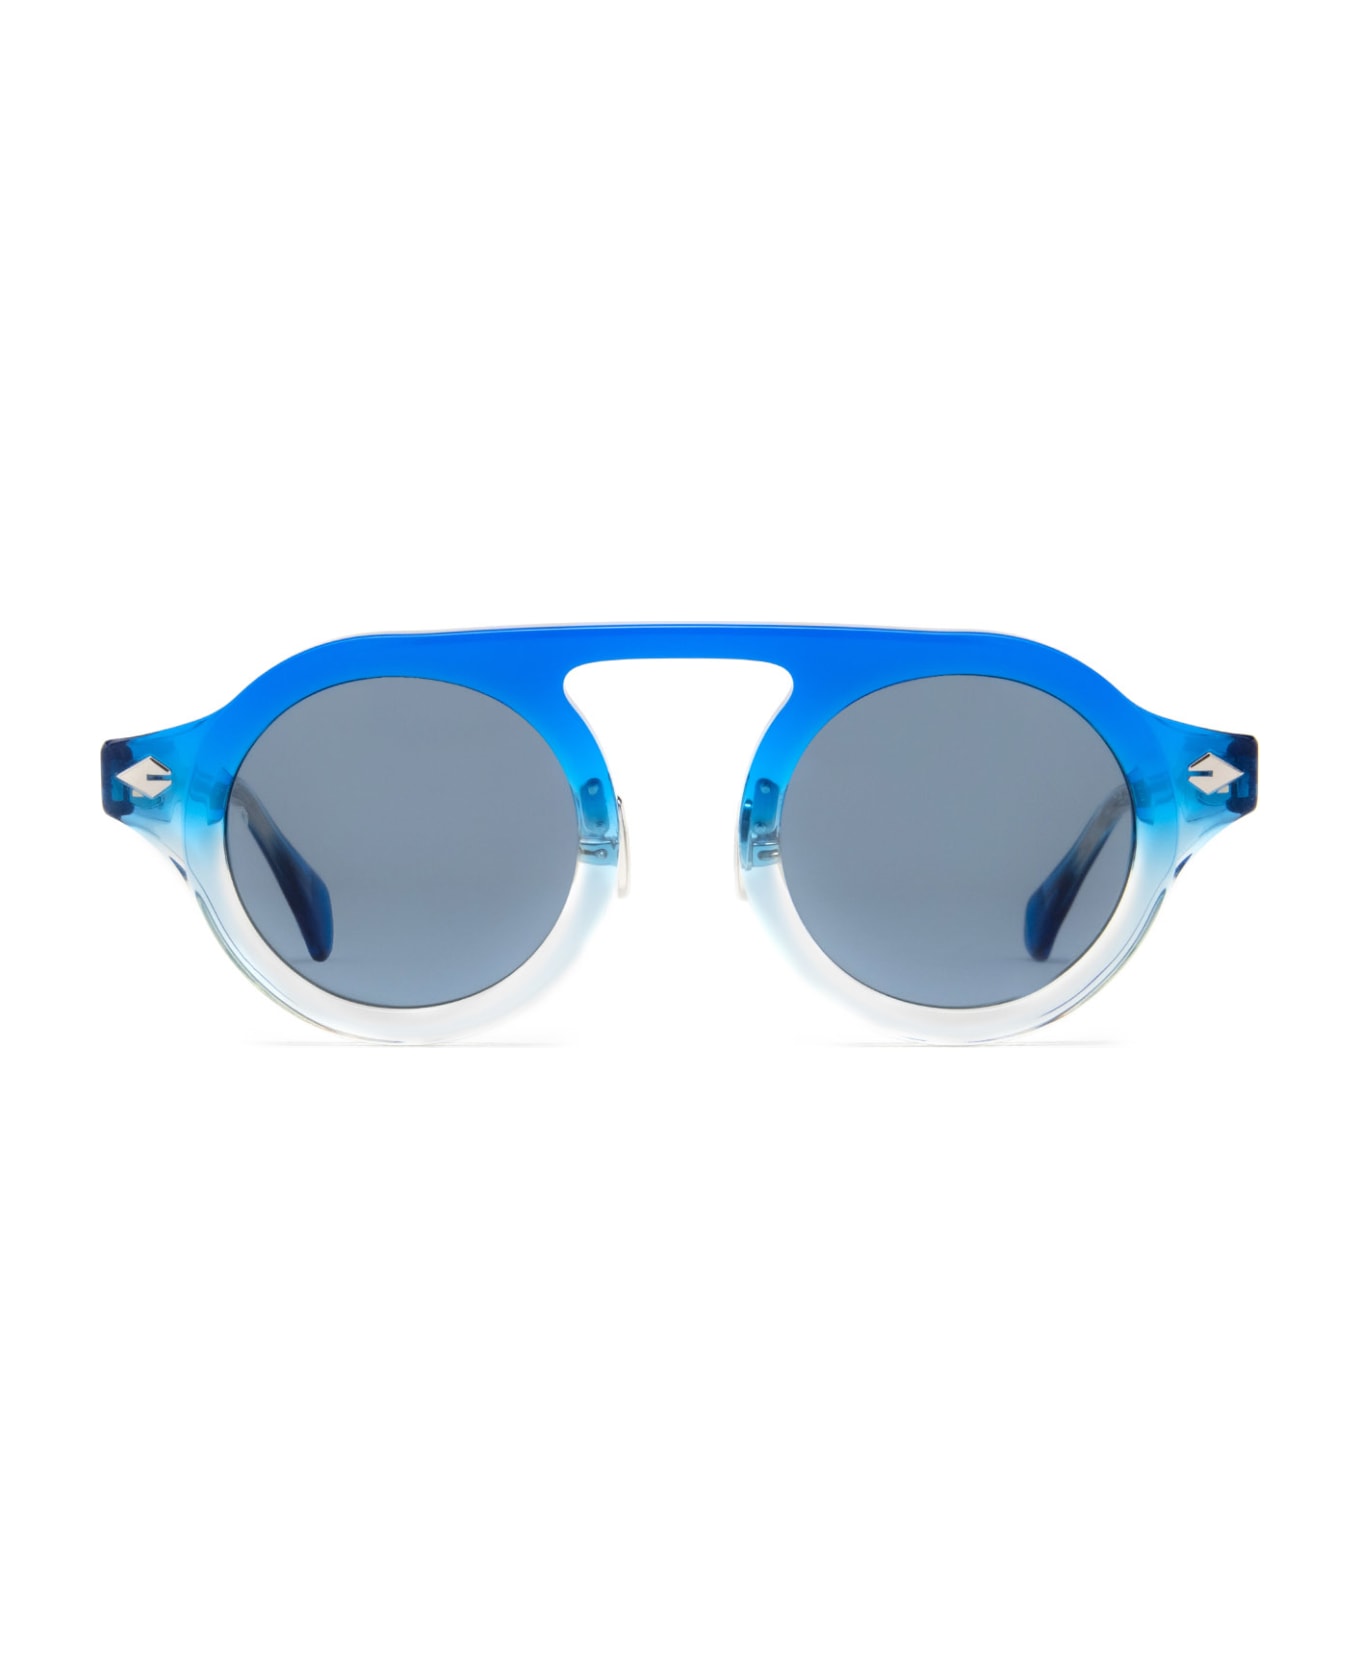 T Henri E2 Santorini Sunglasses サングラス